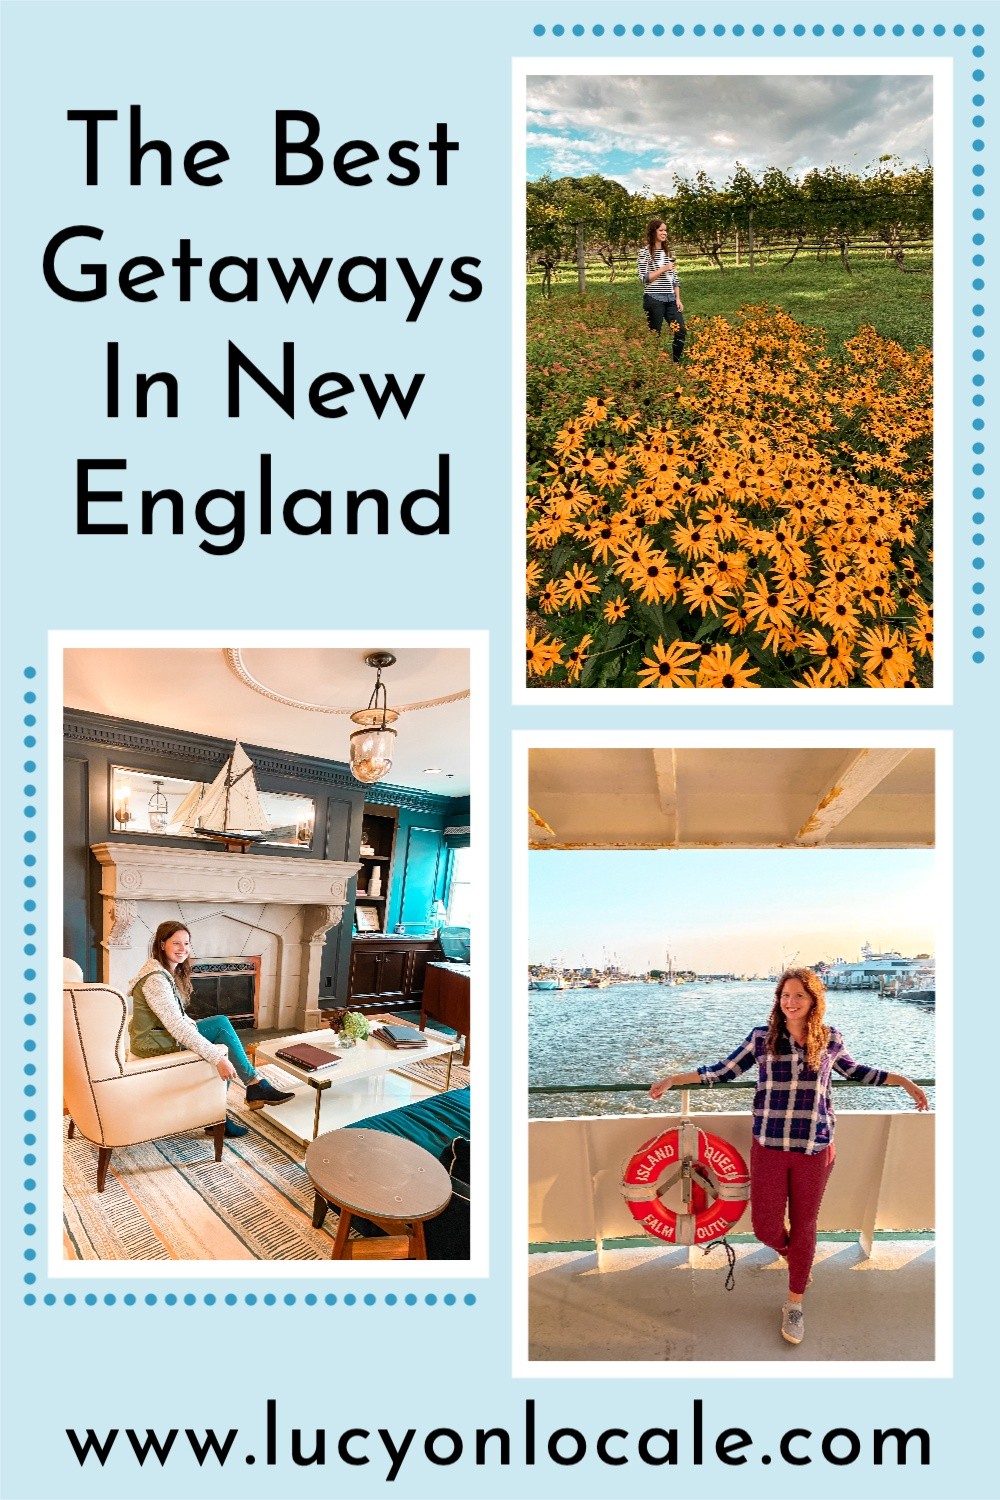 The best getaways in New England